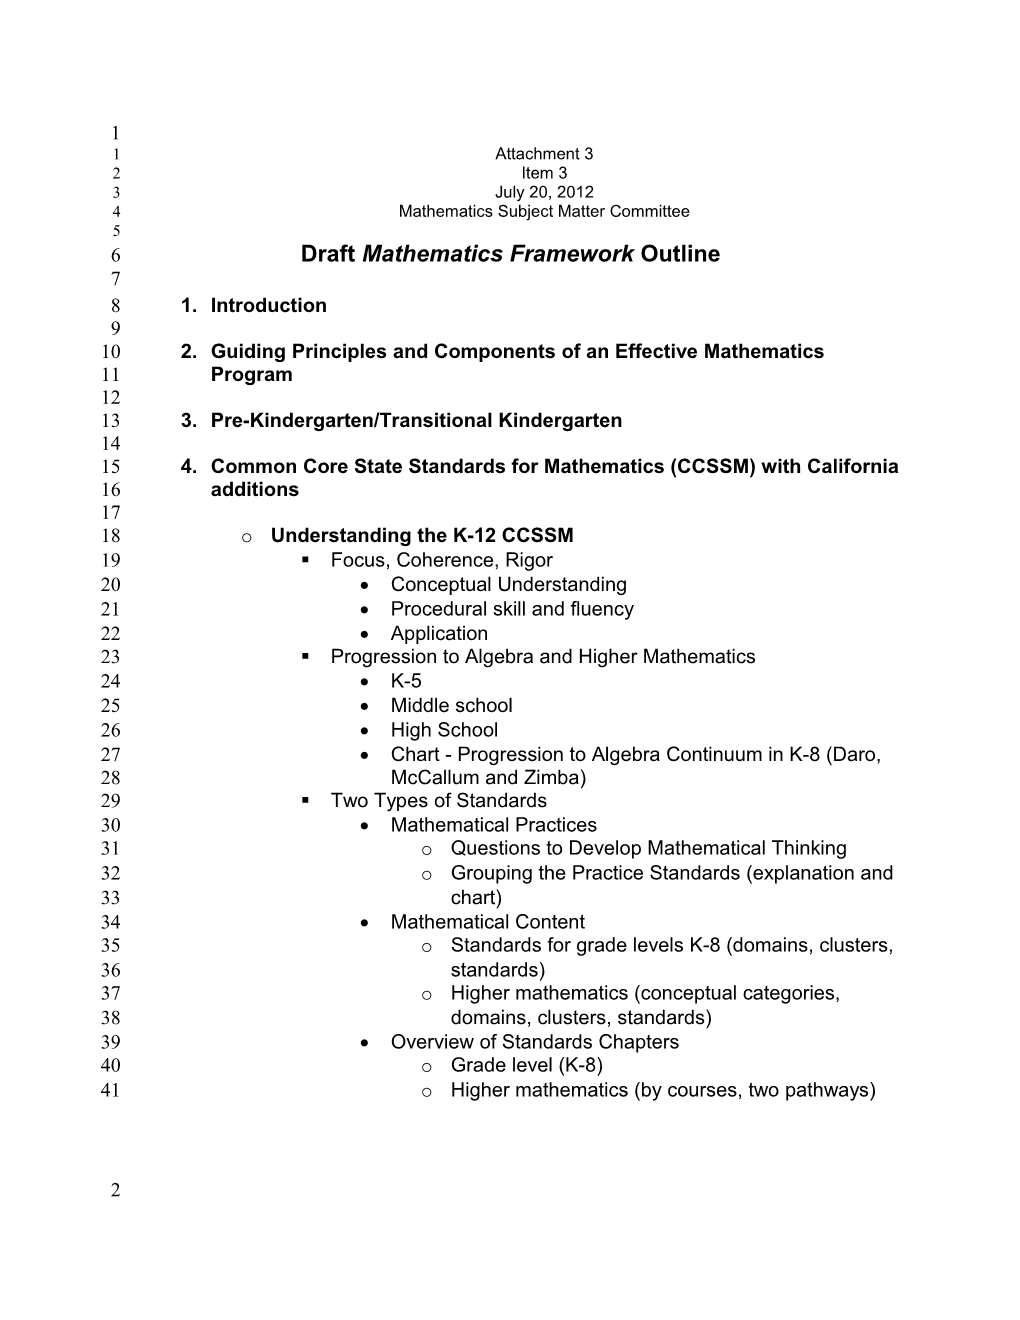 Mathematics Framework Oultine 2012 - Instructional Quality Commisison (CA Dept of Education)